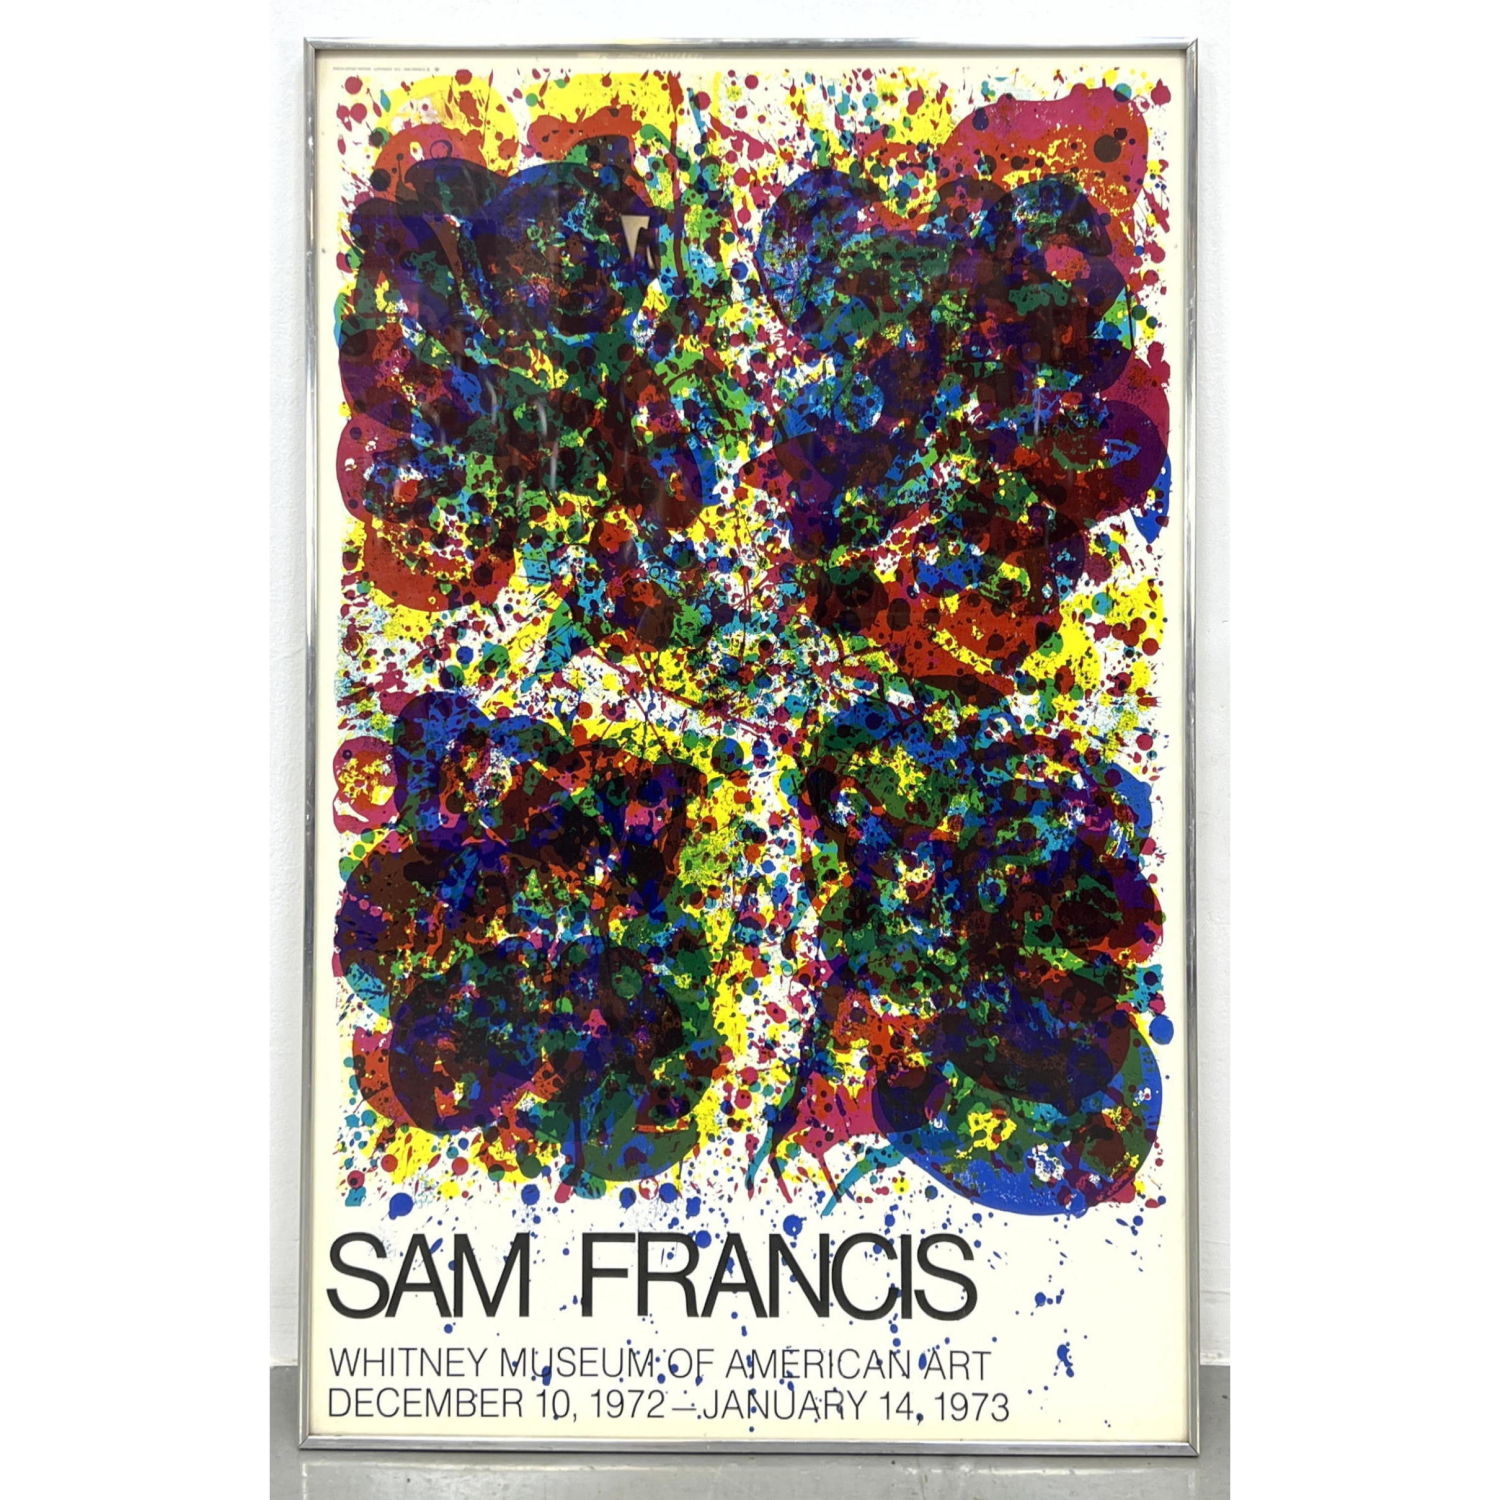 SAM FRANCIS Original exhibition poster